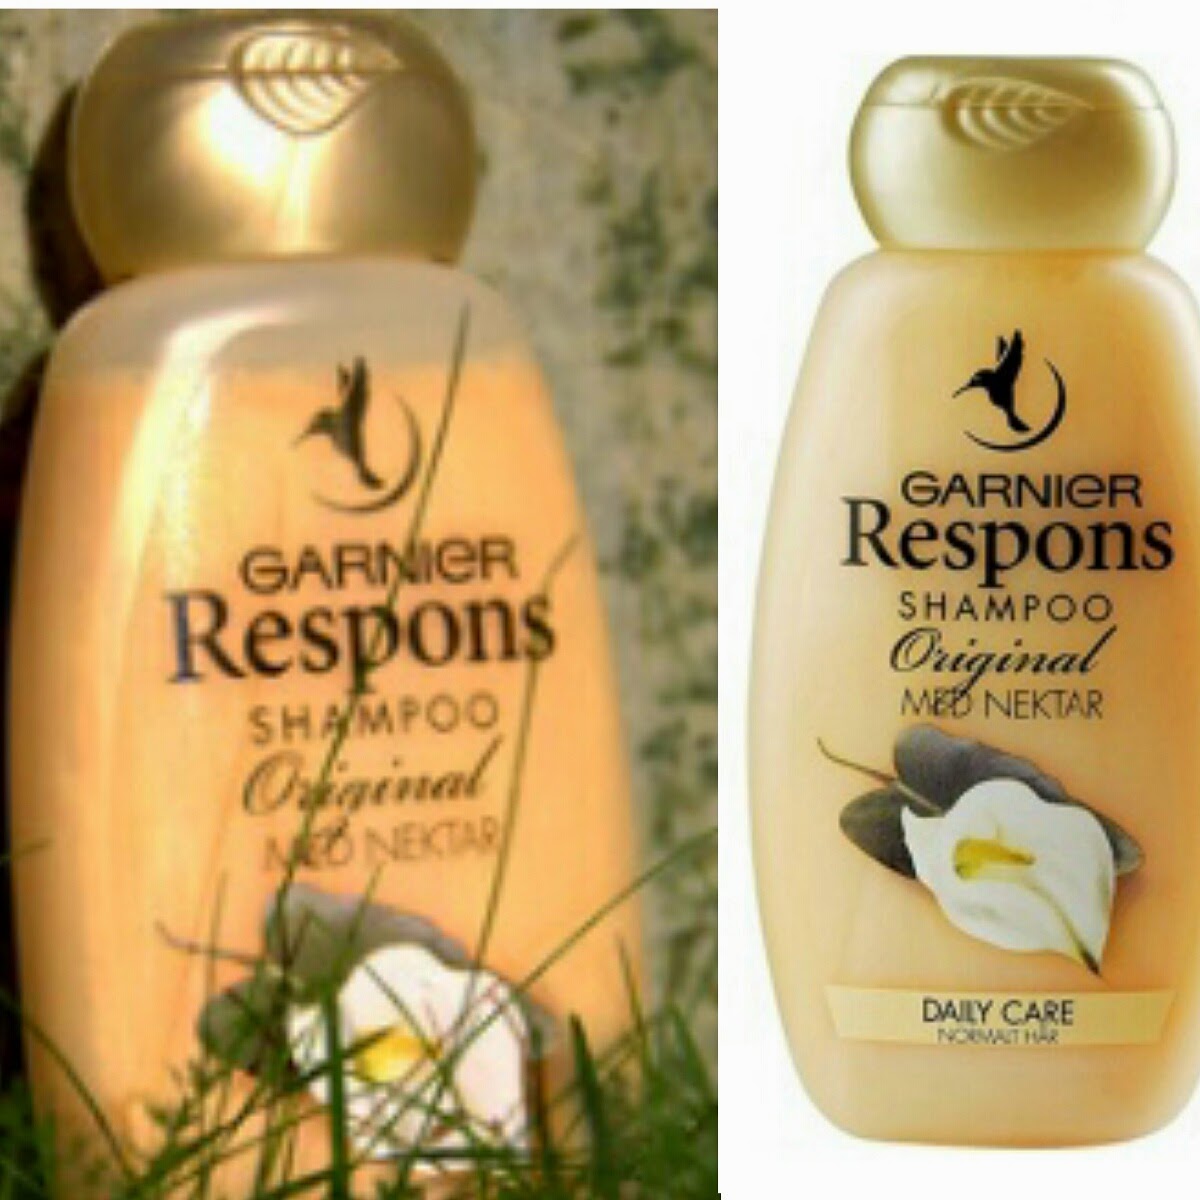 Sofie Anmelder: Garnier Respons Shampoo: Original med nektar